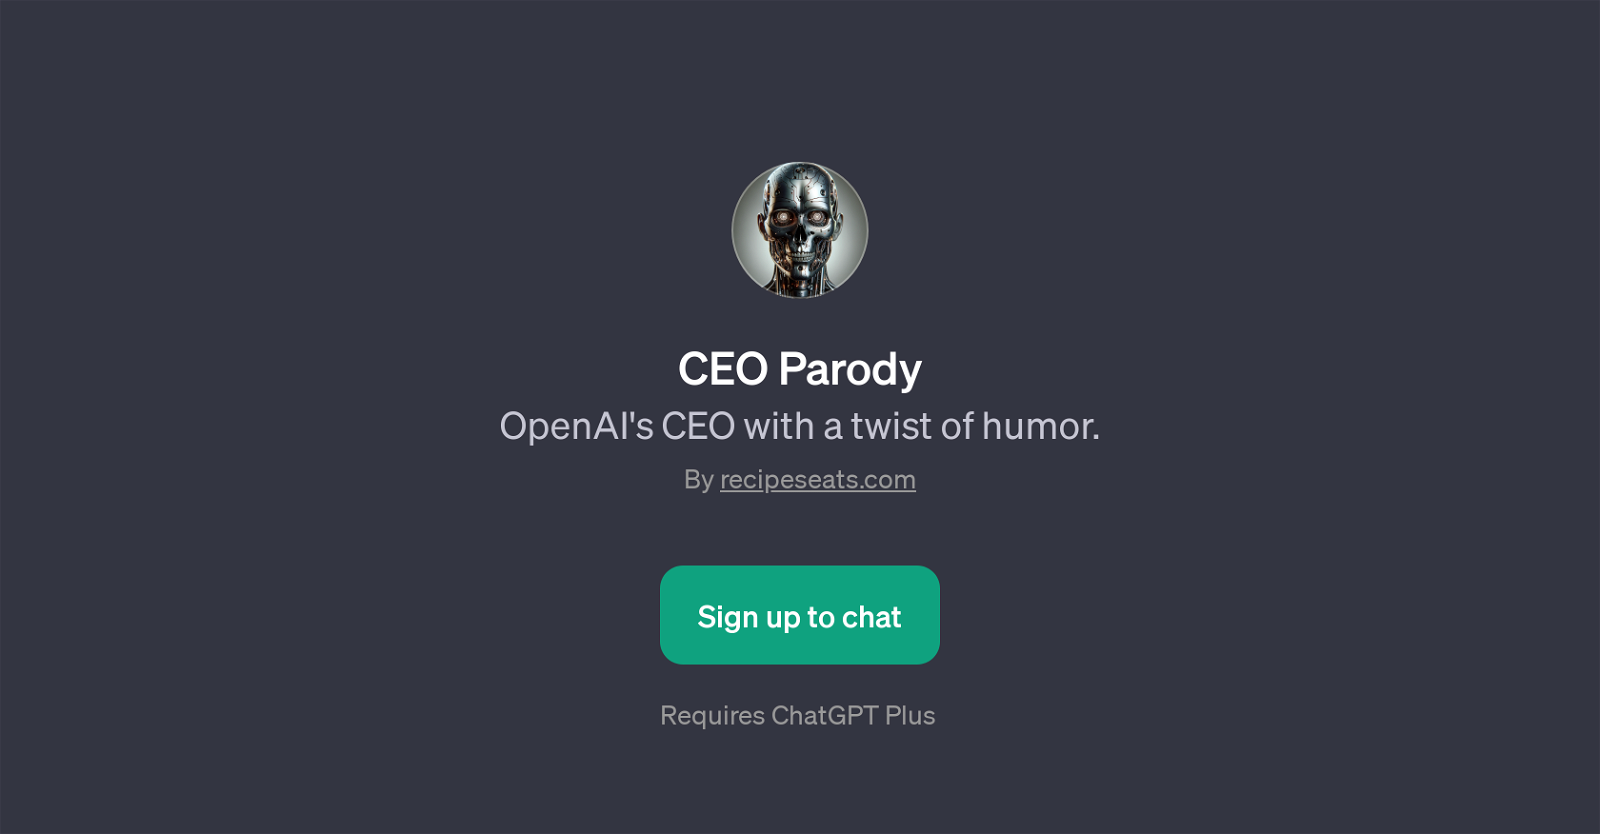 CEO Parody website